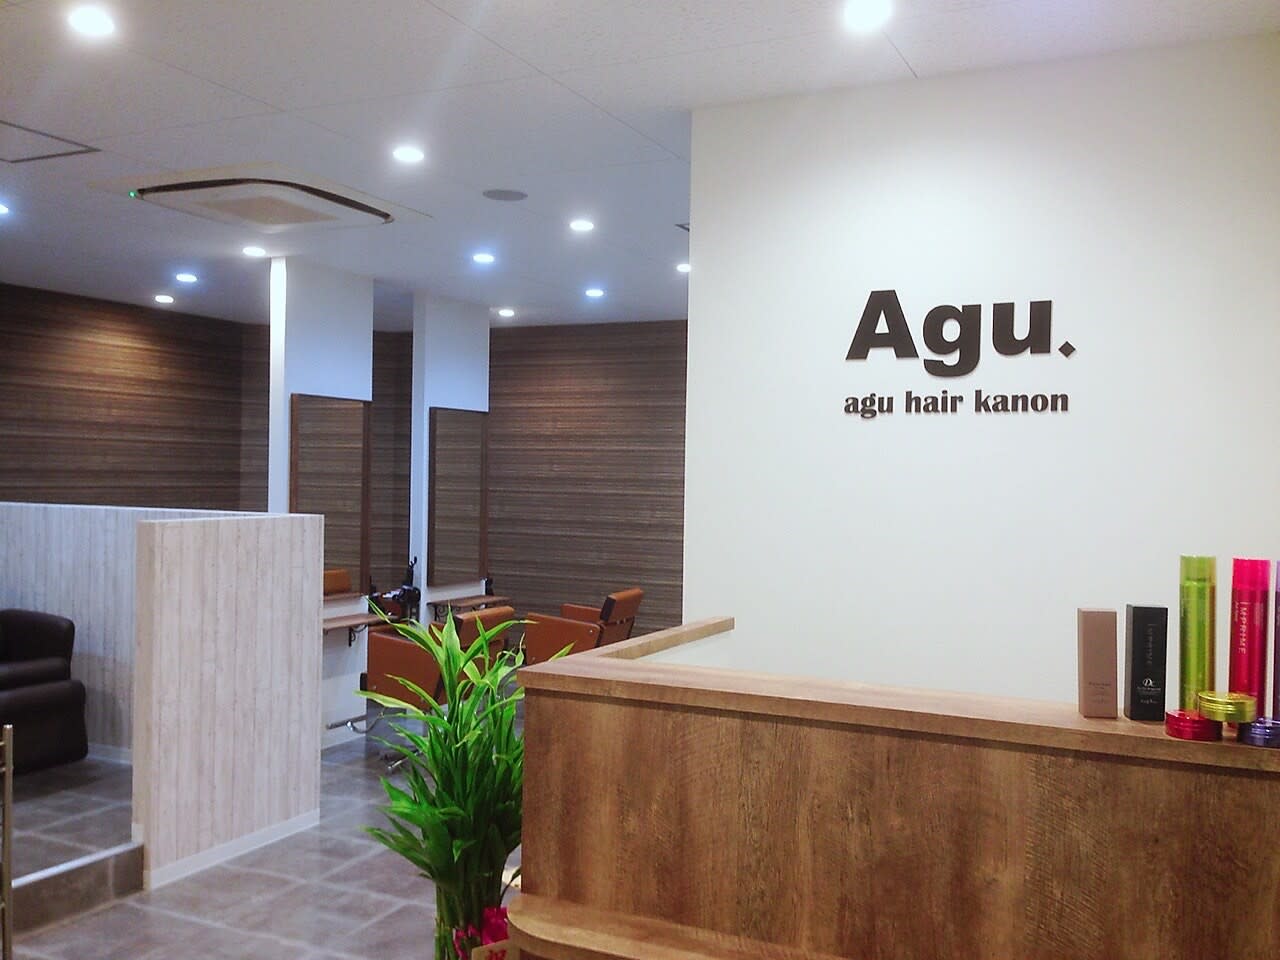 Agu hair kanon 塚本店のアイキャッチ画像